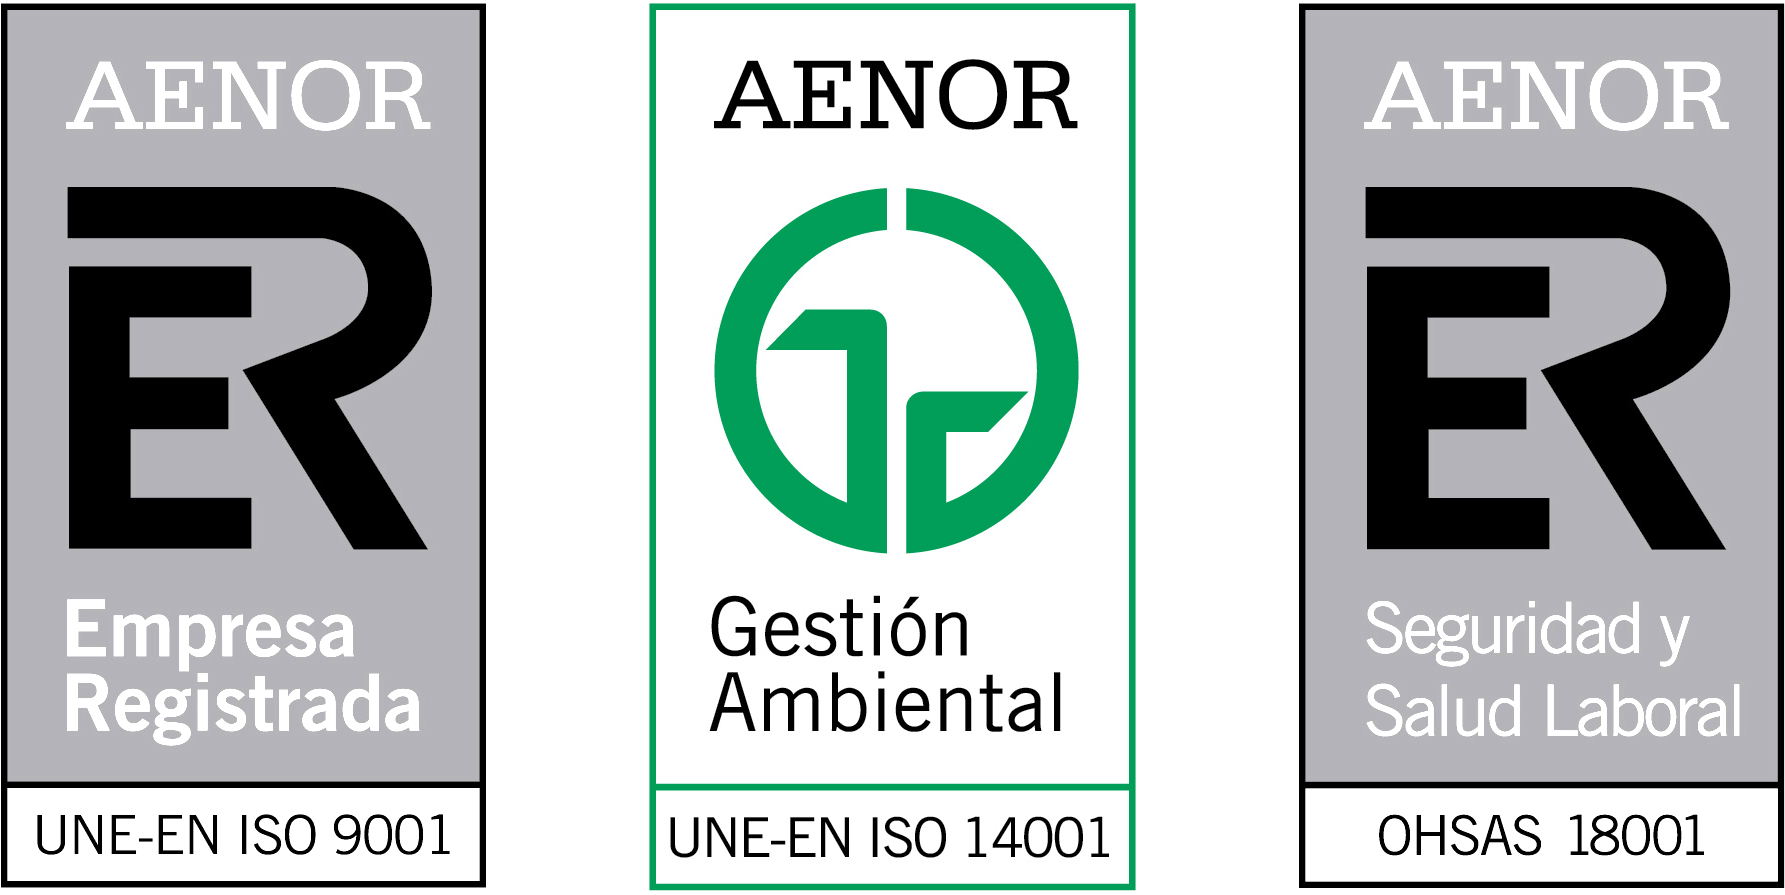 UNE-EN ISO 9001 ISO 14001 OSHAS 18001